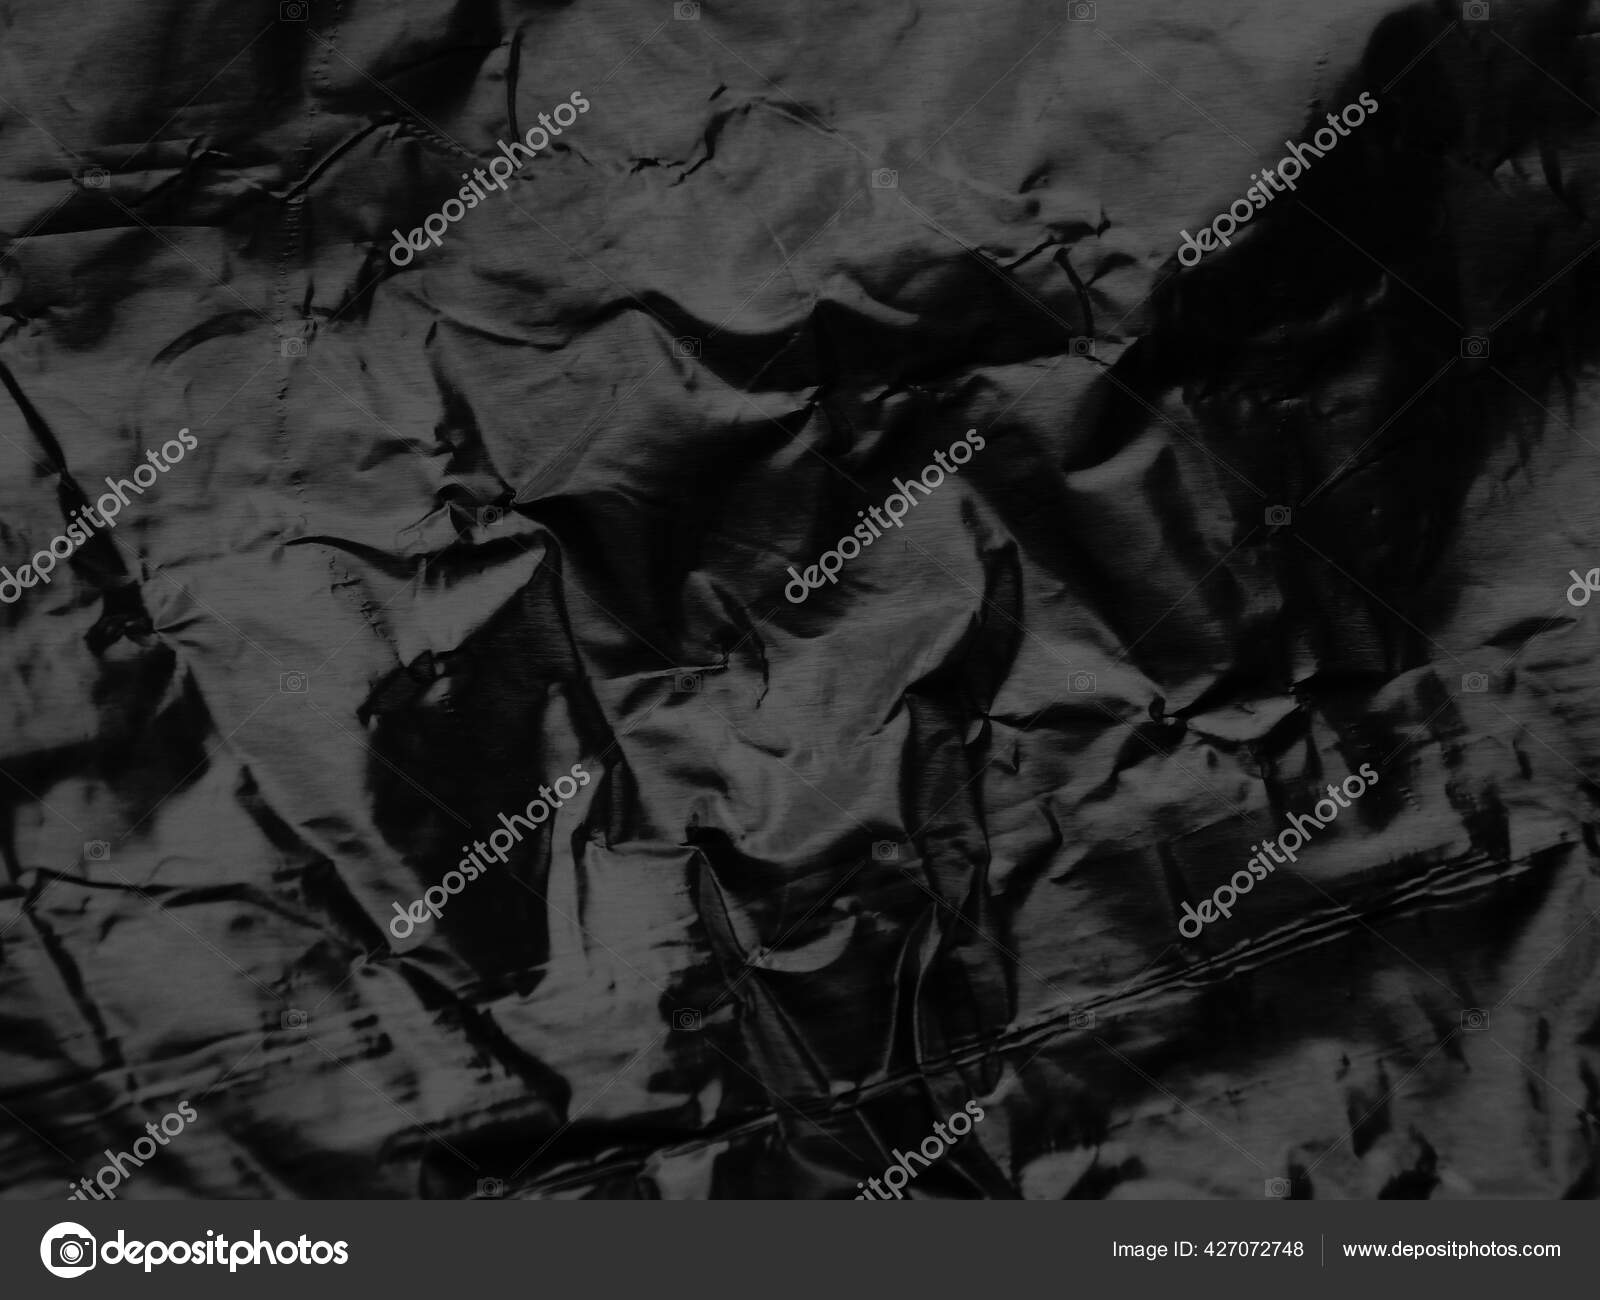 https://st2.depositphotos.com/30750088/42707/i/1600/depositphotos_427072748-stock-photo-wrinkled-black-foil-texture-background.jpg